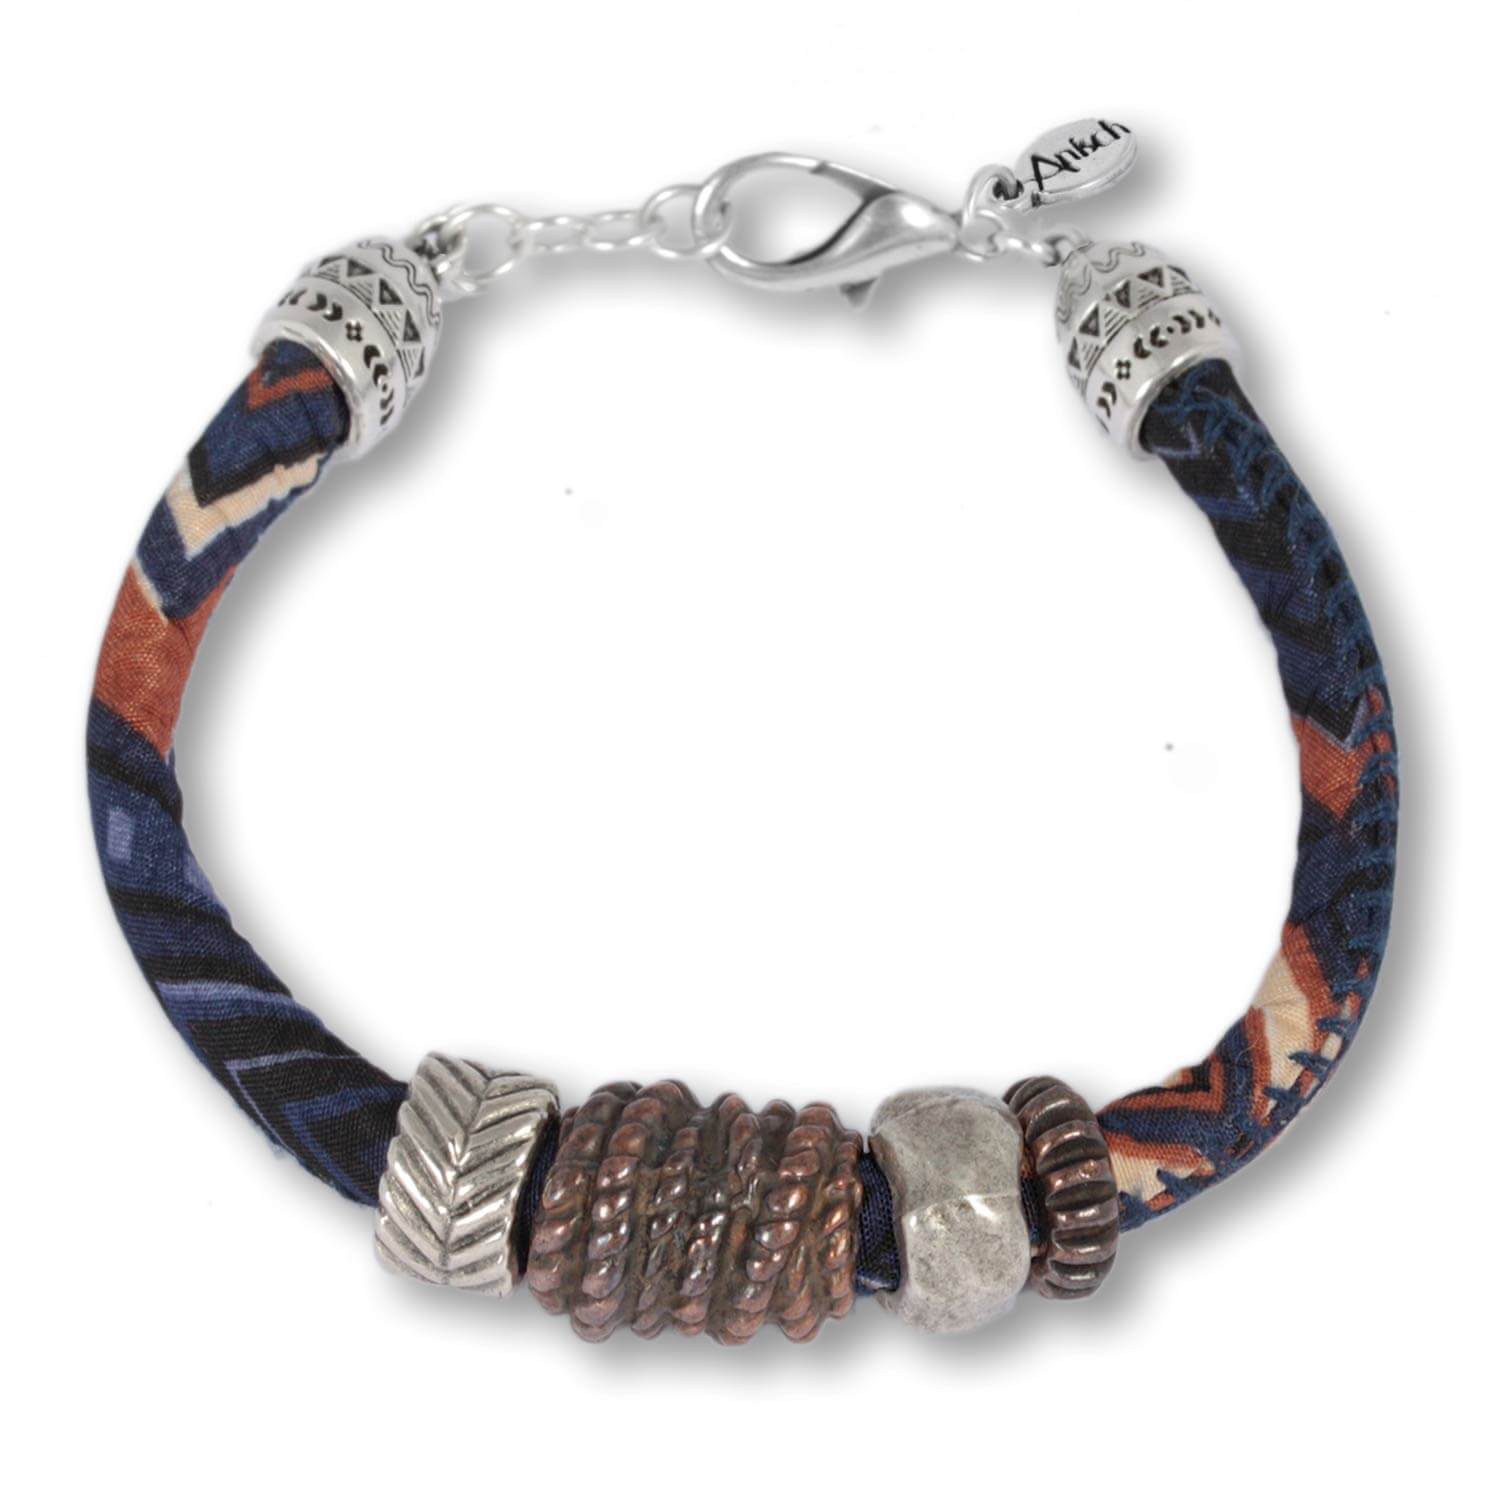 Indigo Chief- Ethno bracelet with traditional patterns